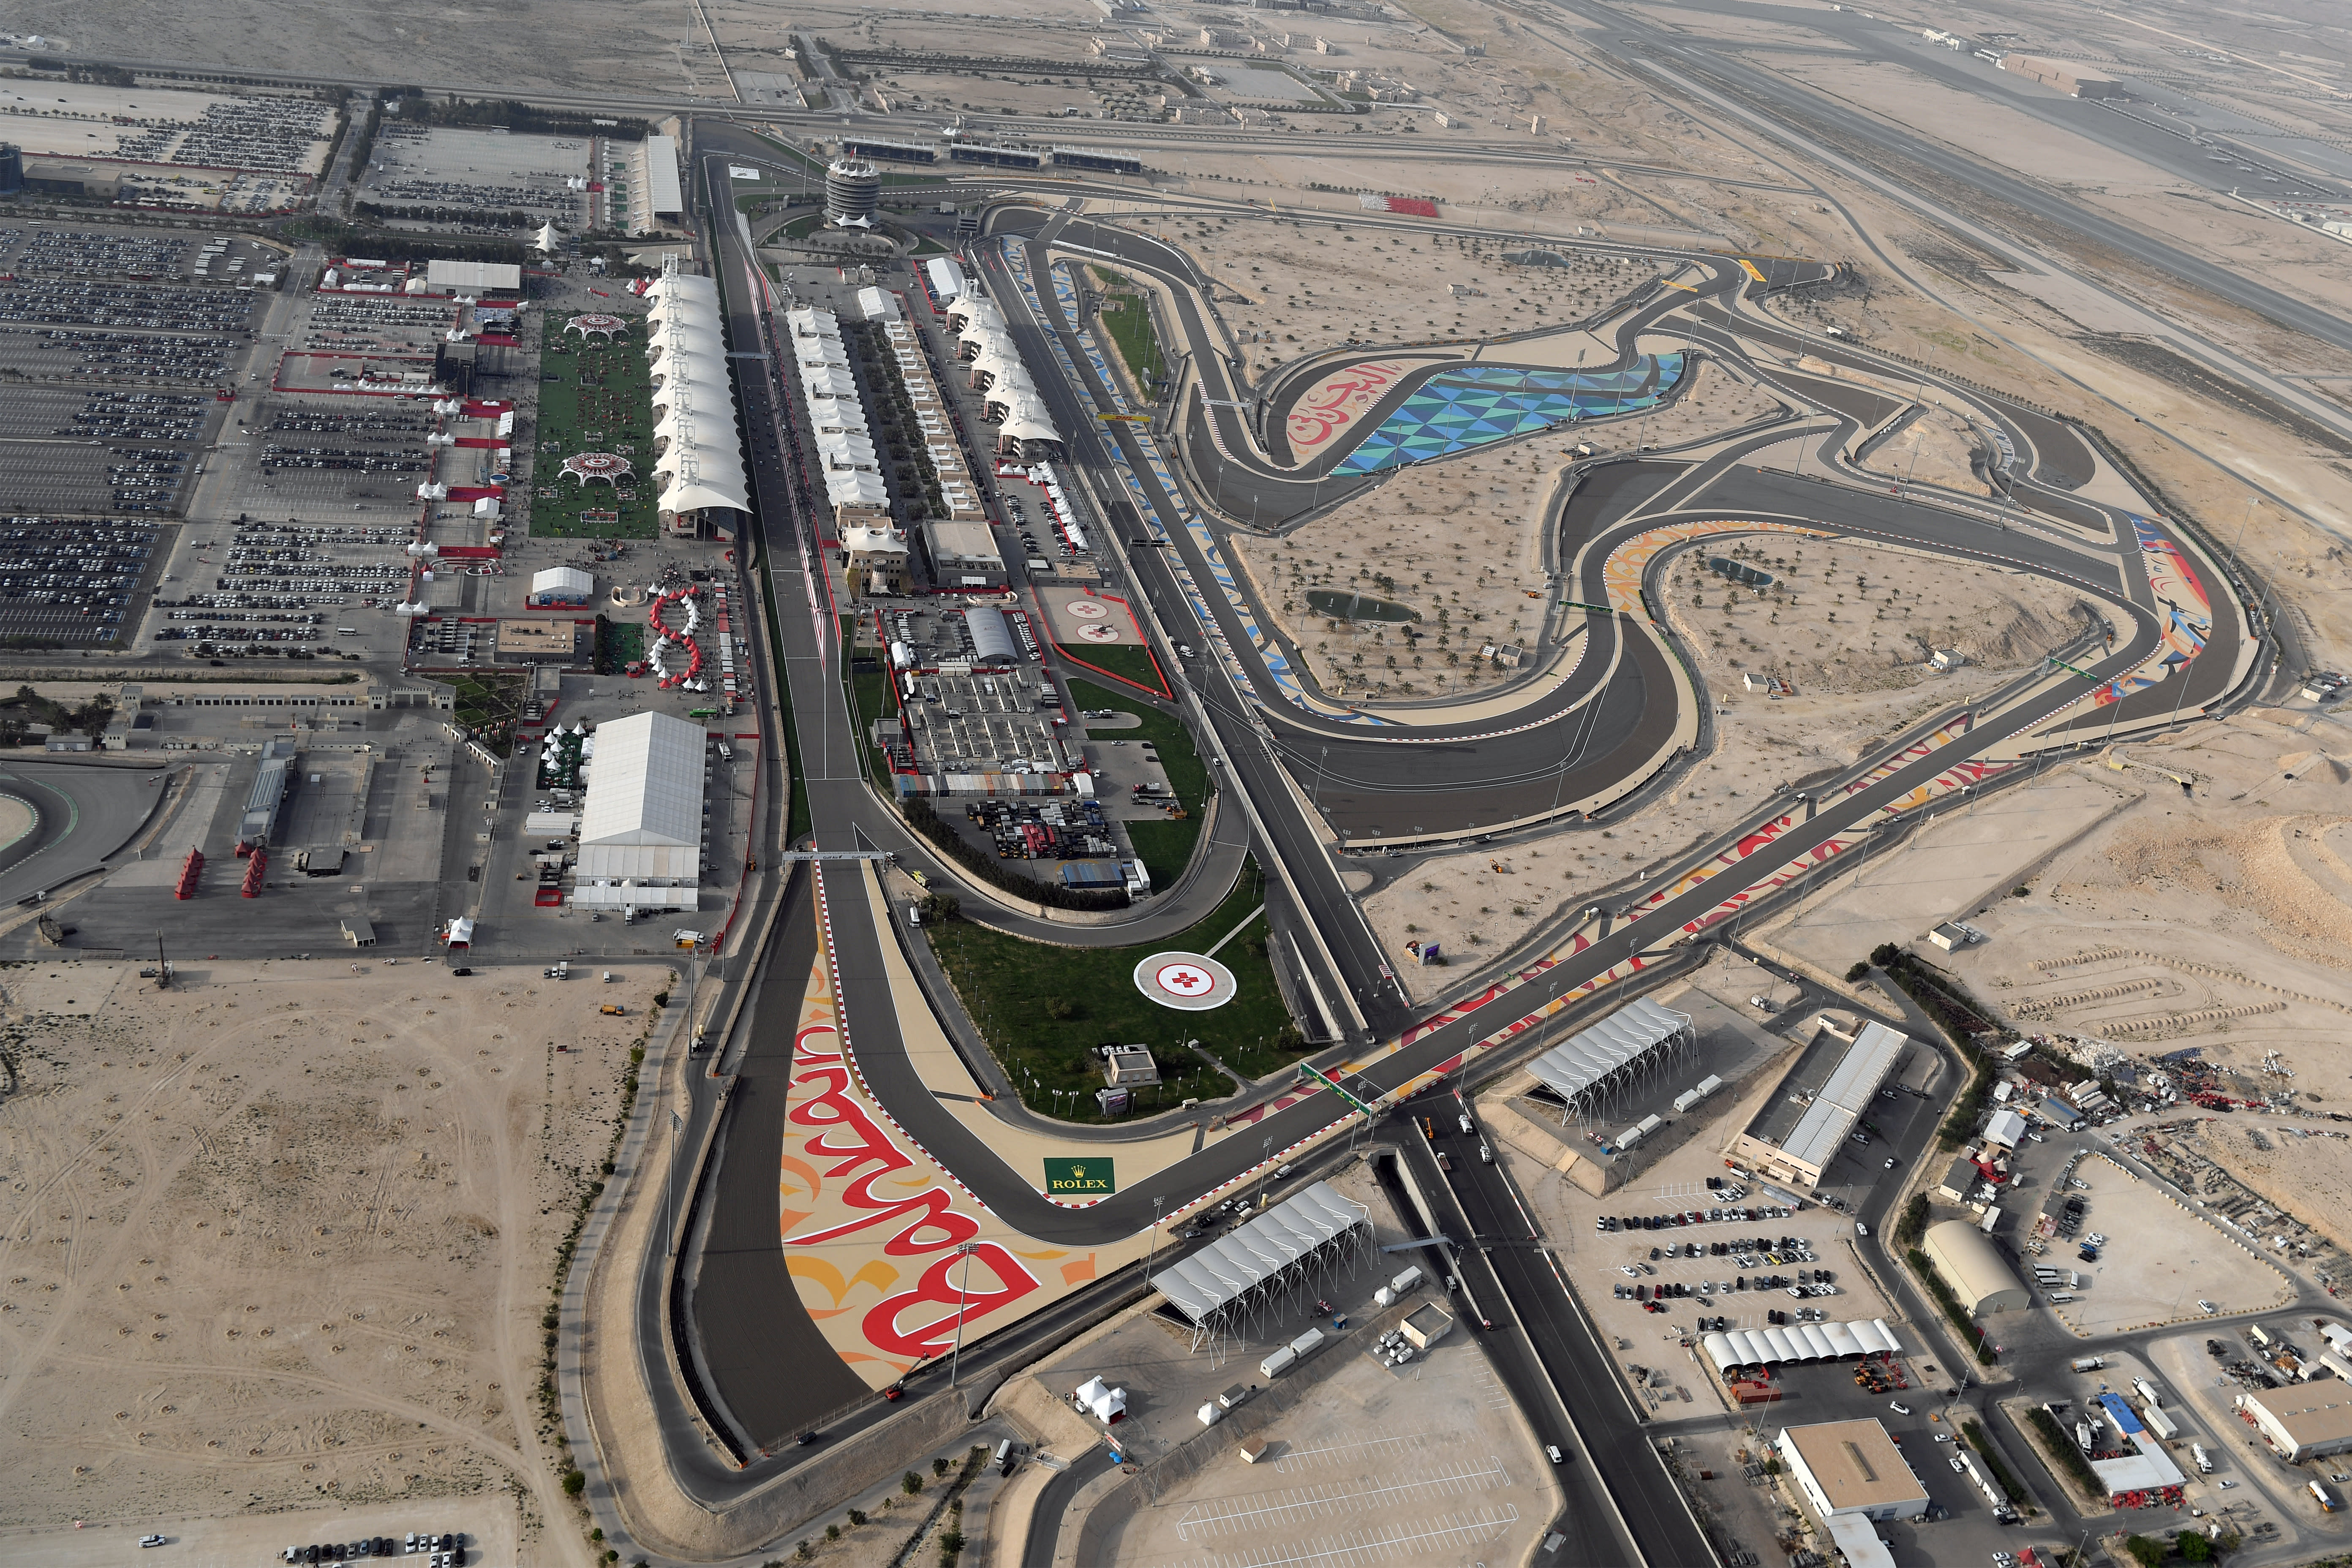 The Bahrain International Circuit during the day, showing the Sakhir desert sand